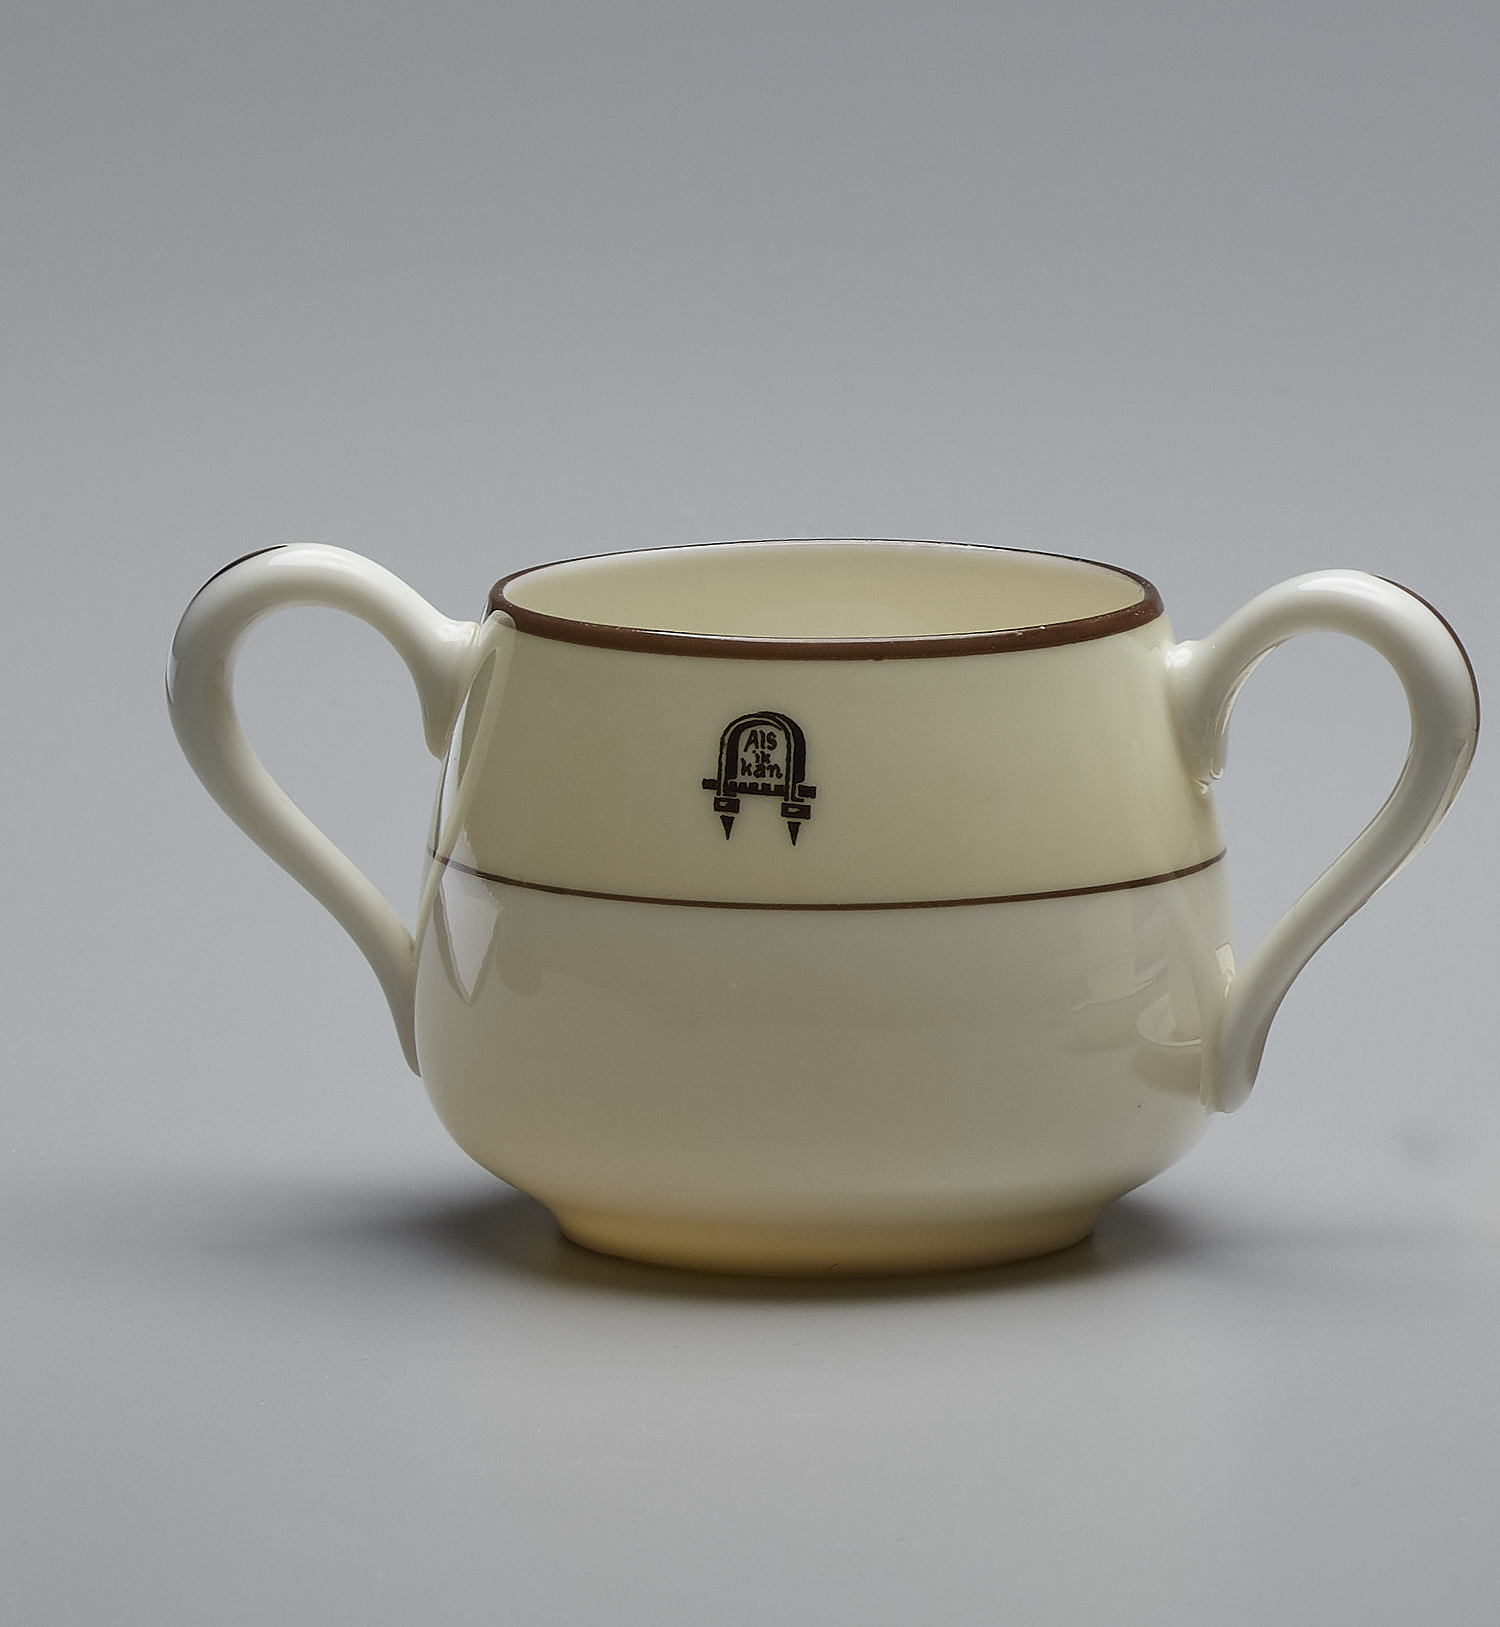 https://www.stickleymuseum.org/wp-content/uploads/Stickley-Museum-Ceramics0174_TIFF-16-bit-1_Web-Resolution-JPEG.jpg